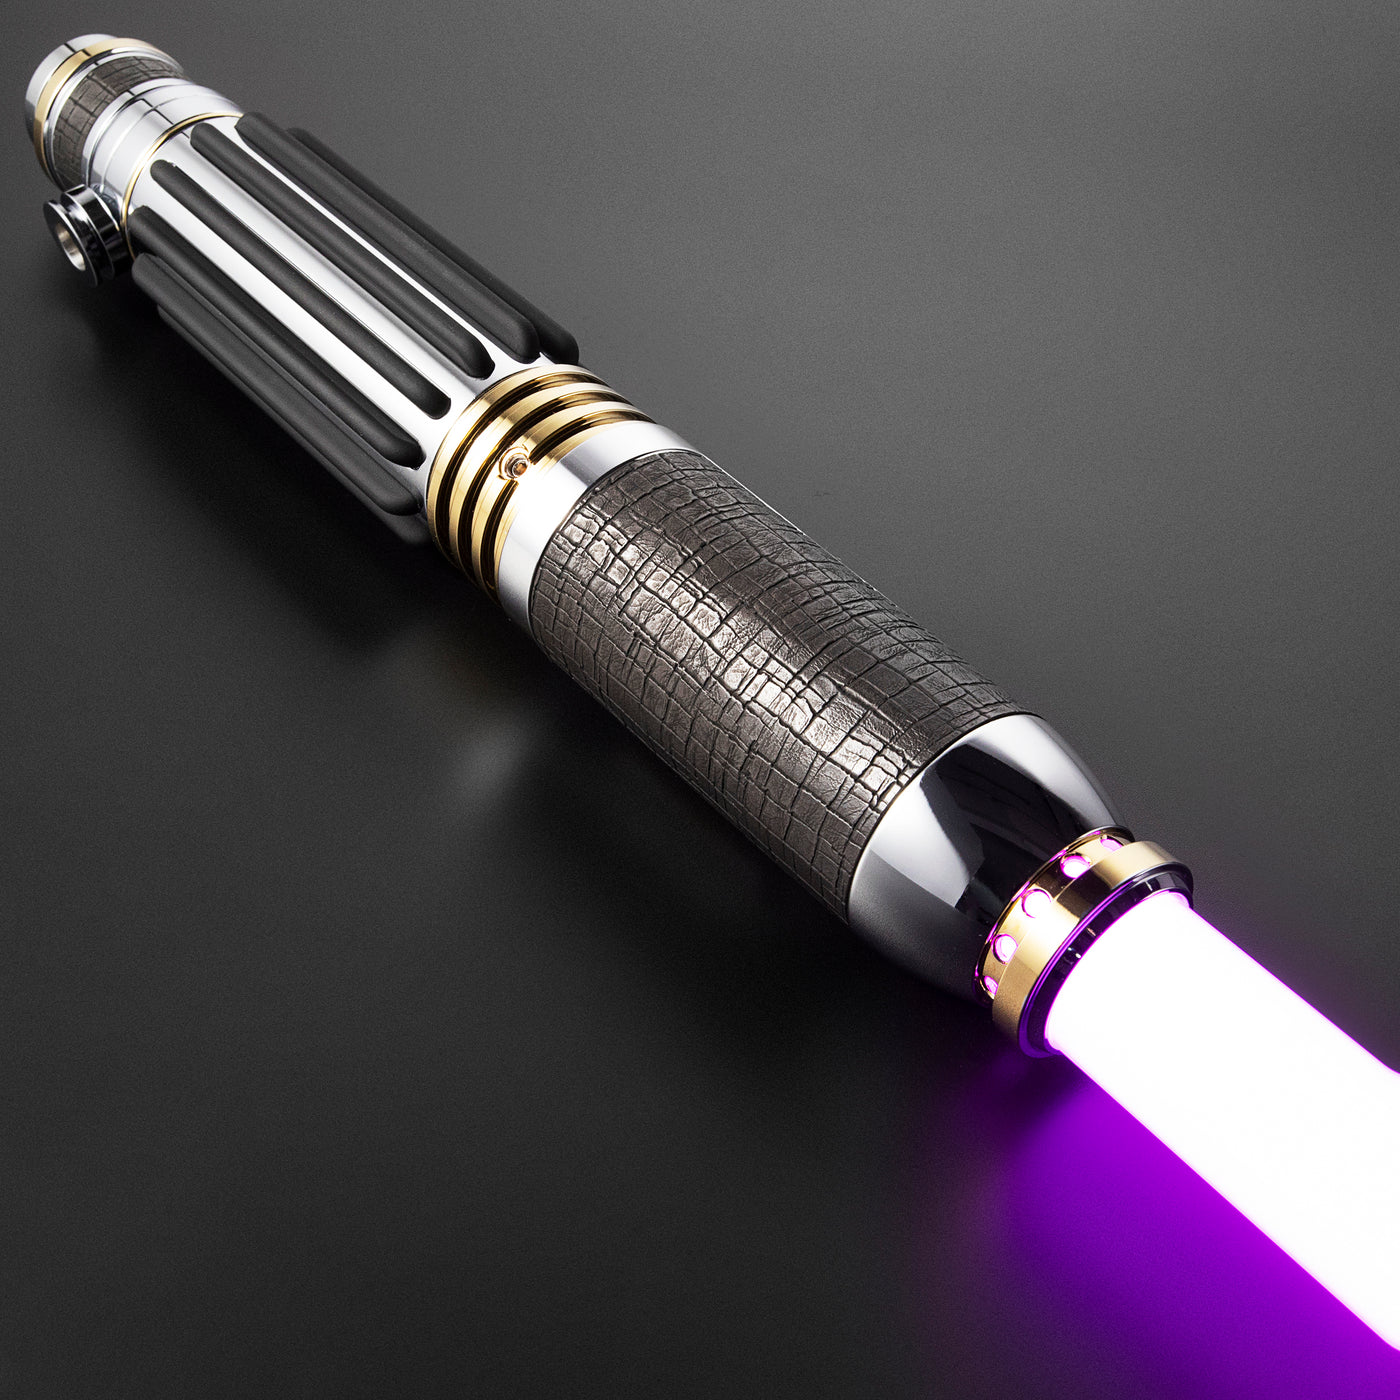 Korunnai - KenJo Sabers - Star Wars Lightsaber replica Jedi Sith - Best sabershop Europe - Nederland light sabers kopen -